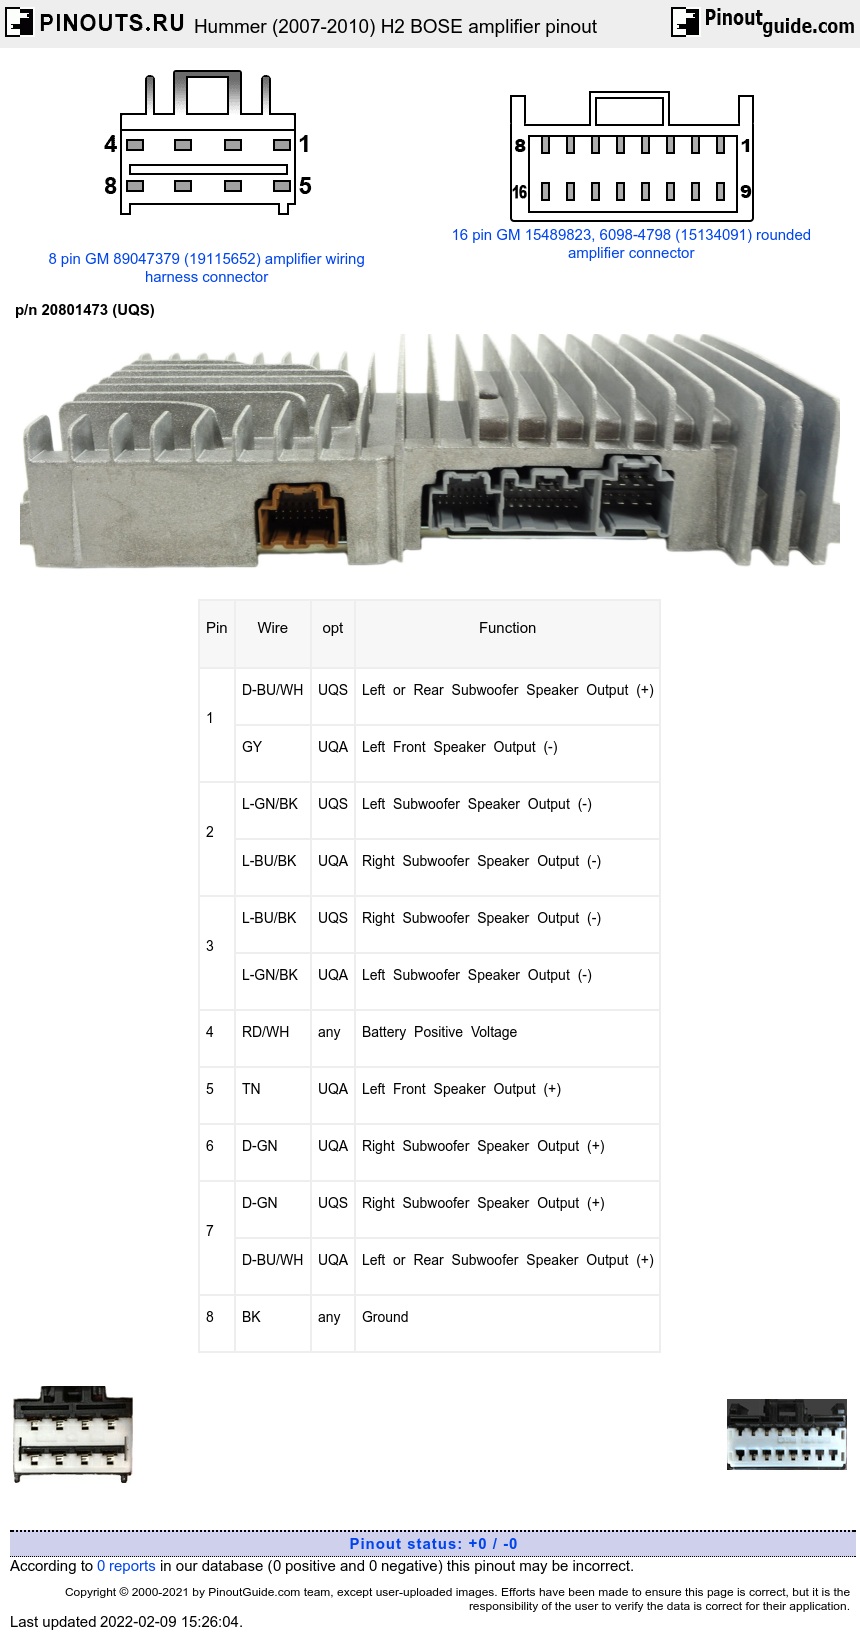 Hummer (2007-2010) H2 BOSE amplifier diagram